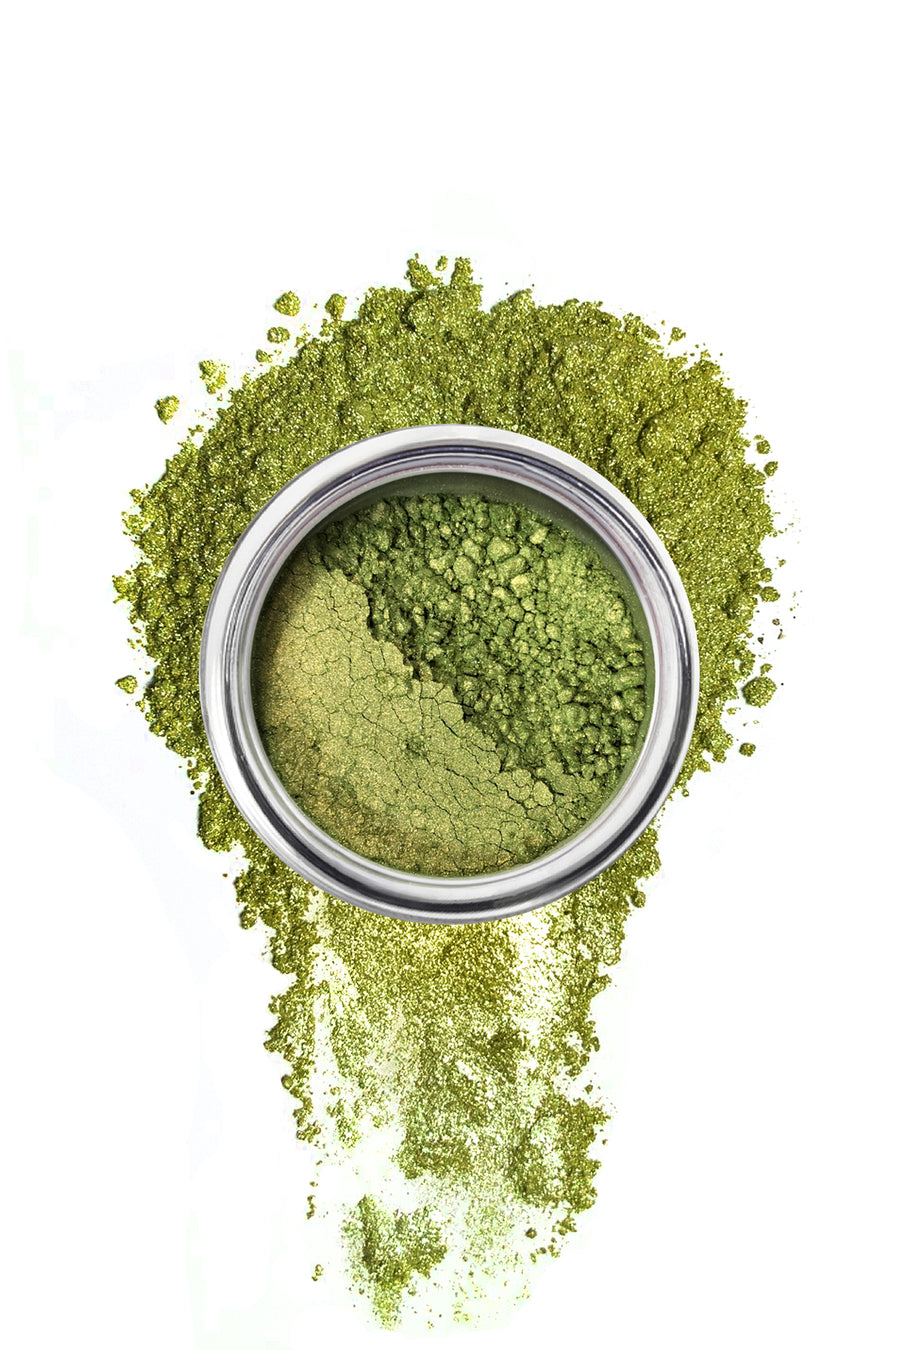 Shimmer Eyeshadow #46 - Light Green - Blend Mineral Cosmetics